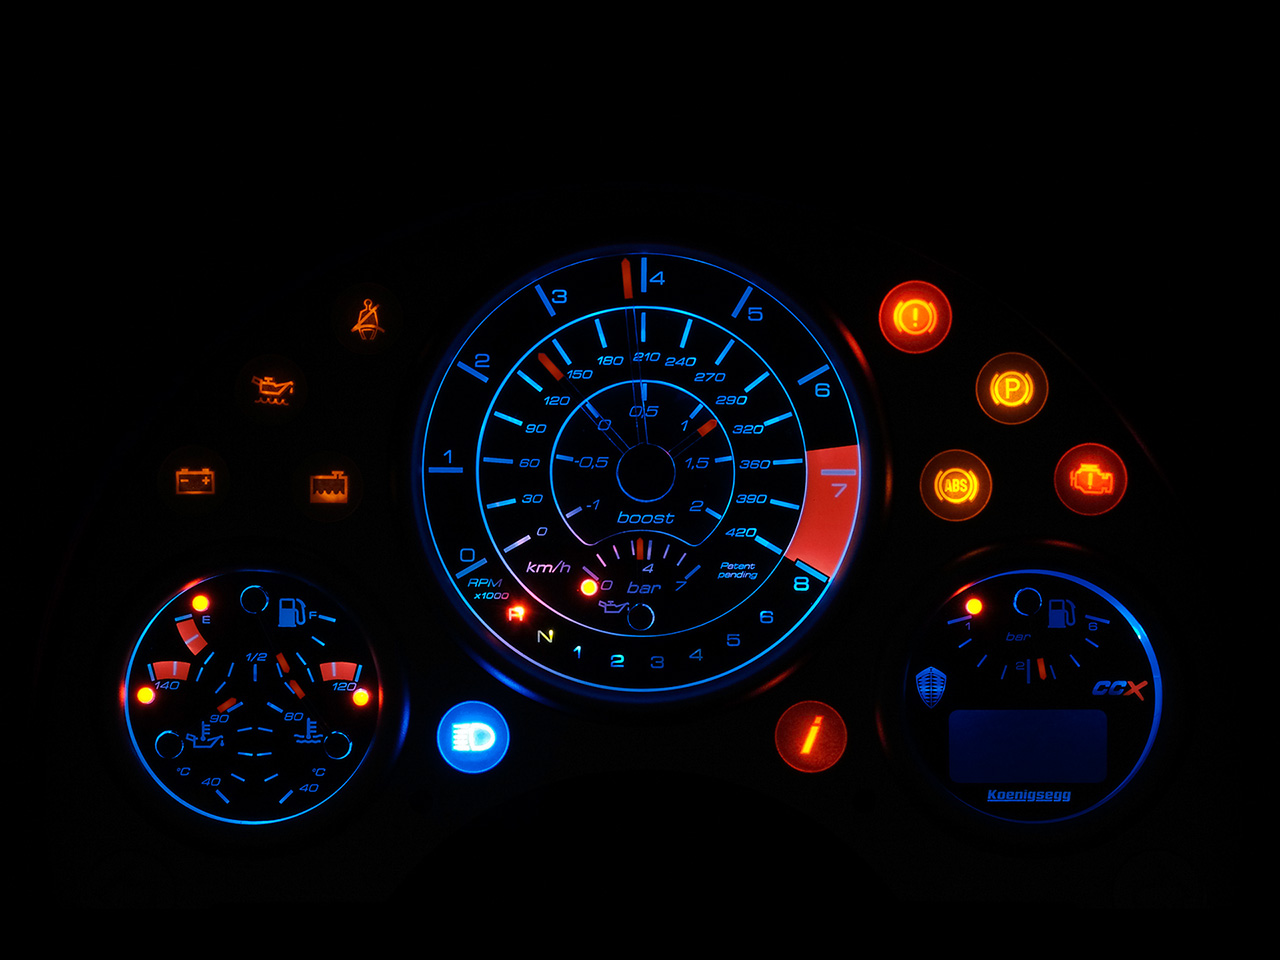 79+] Koenigsegg Speedometer Wallpapers - WallpaperSafari